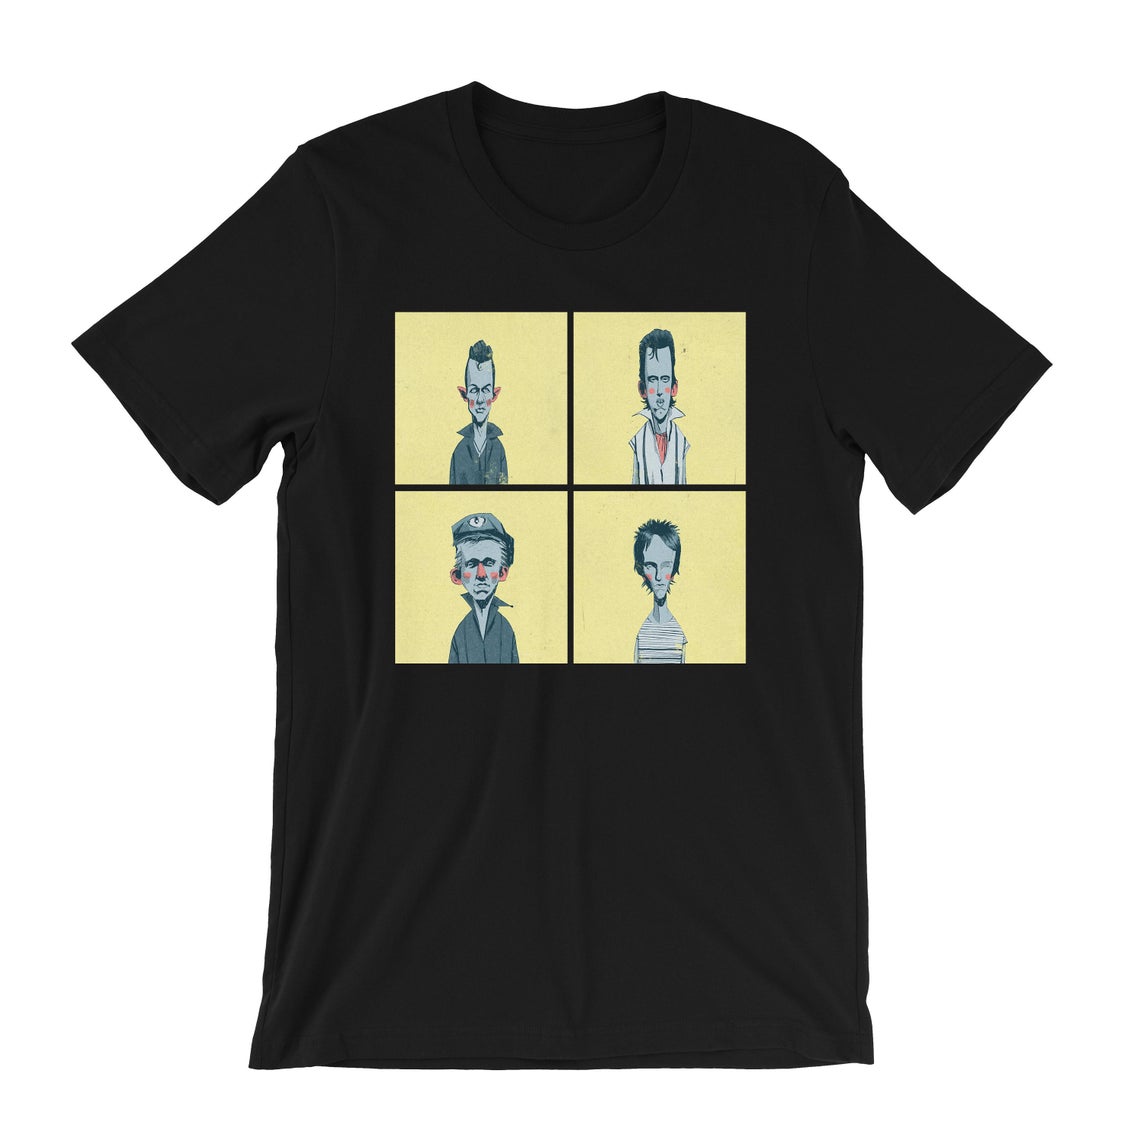 The Clash 4 box image T-Shirt